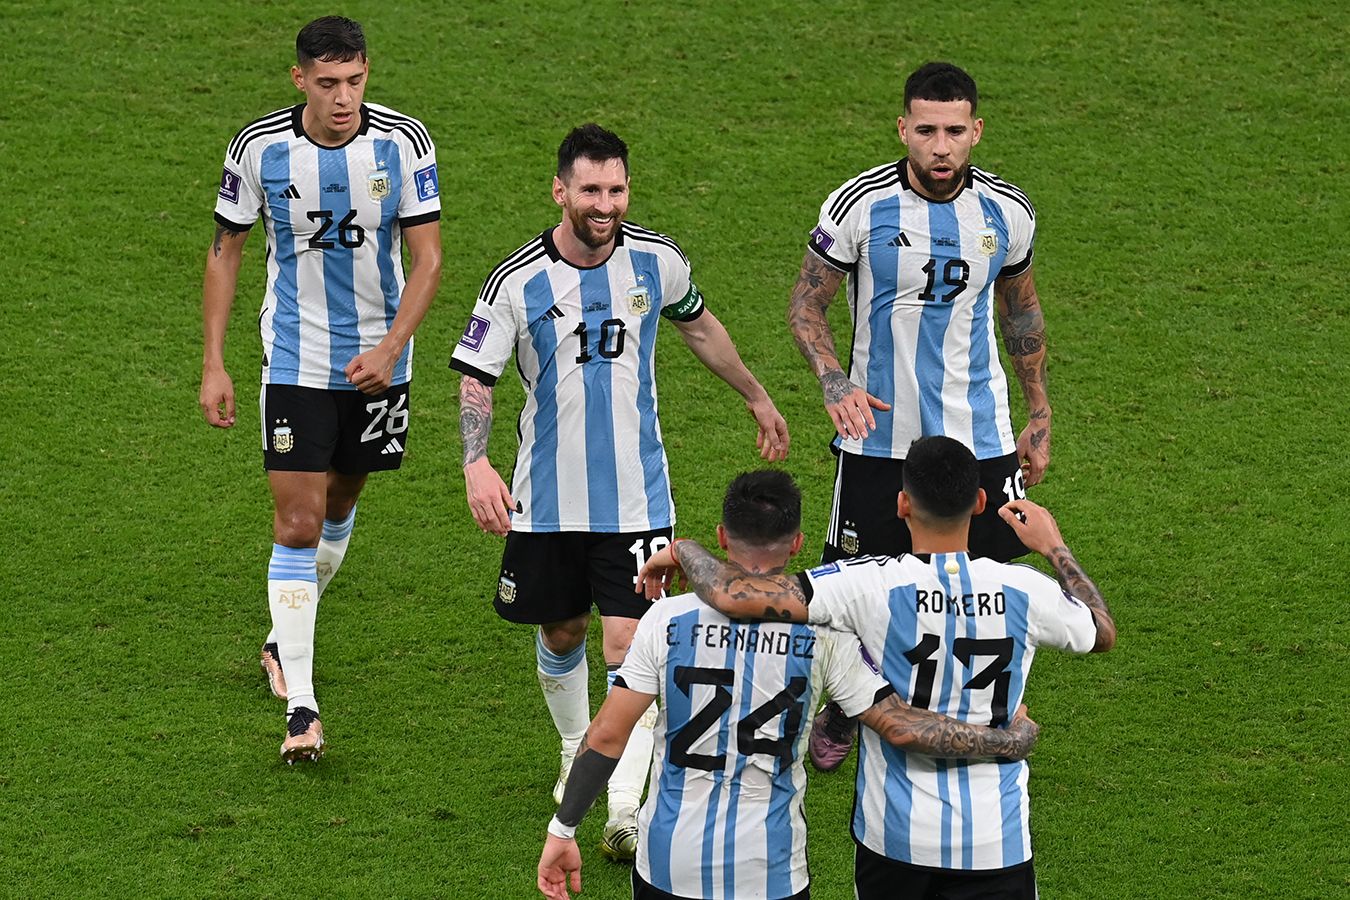 Аргентина — Канада: дата и время матча 1/2 финала Кубка Америки по футболу, где смотреть